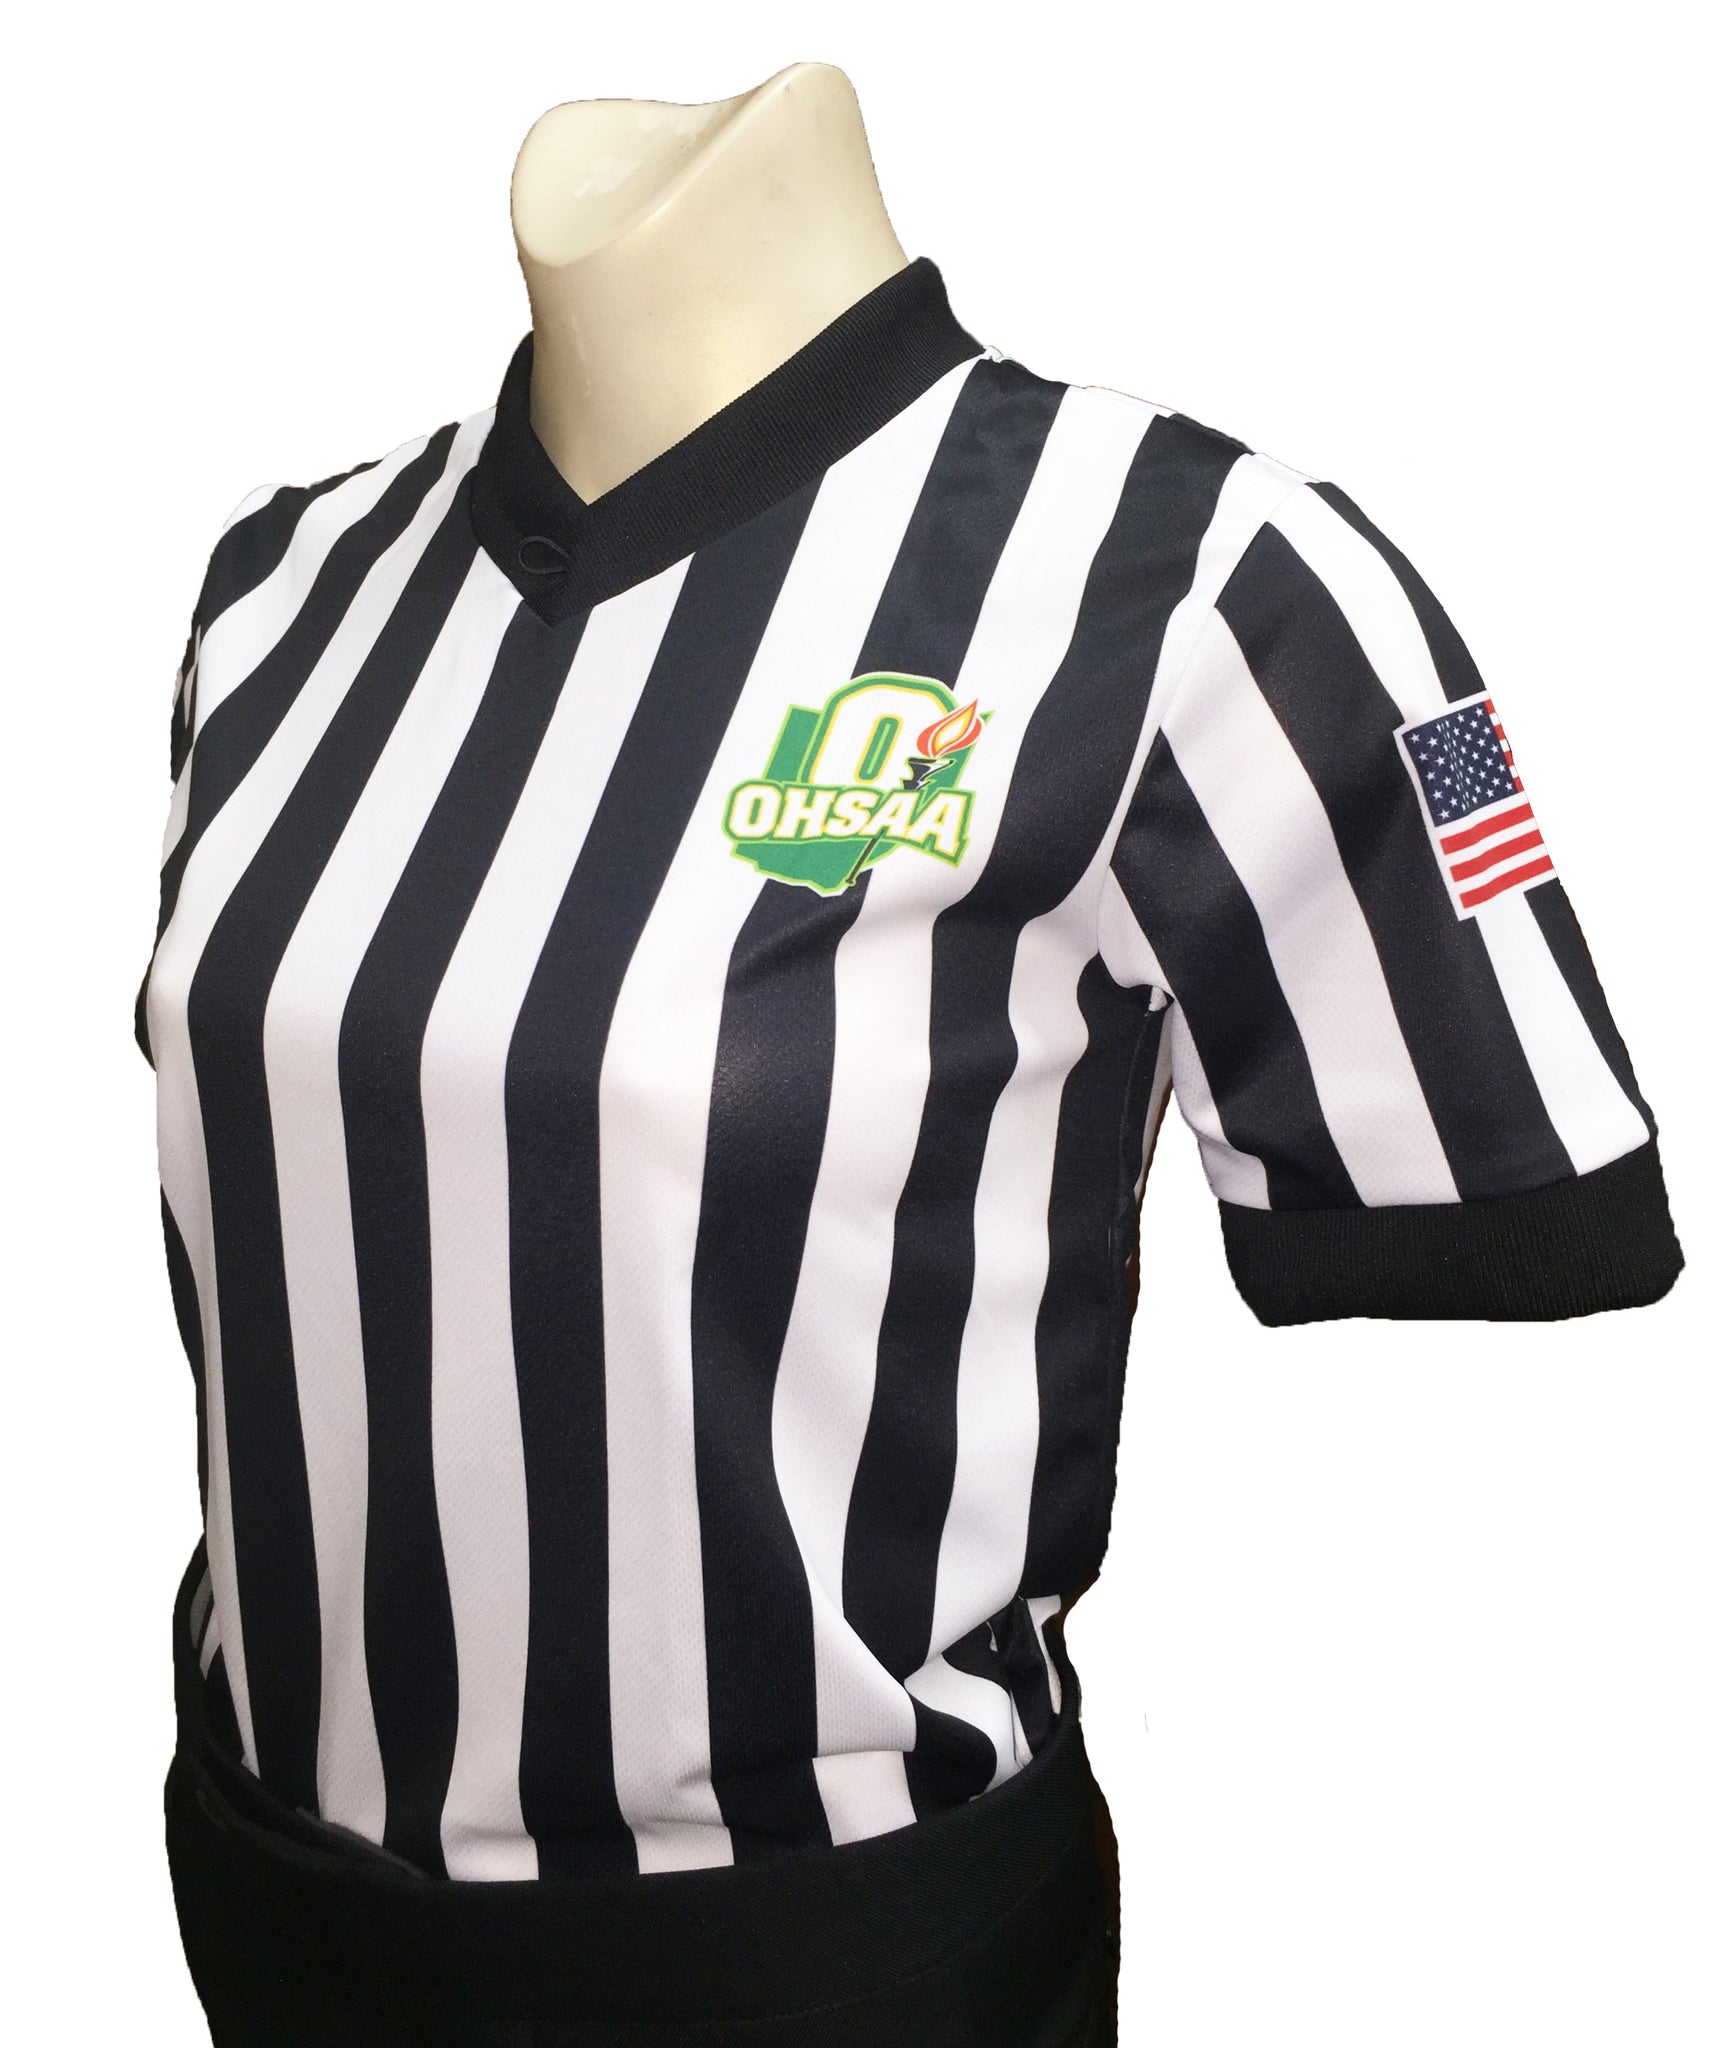 USA211OH-607 - Smitty "Made in USA" - "BODY FLEX" "OHSAA" Short Sleeve Basketball V-Neck Shirt